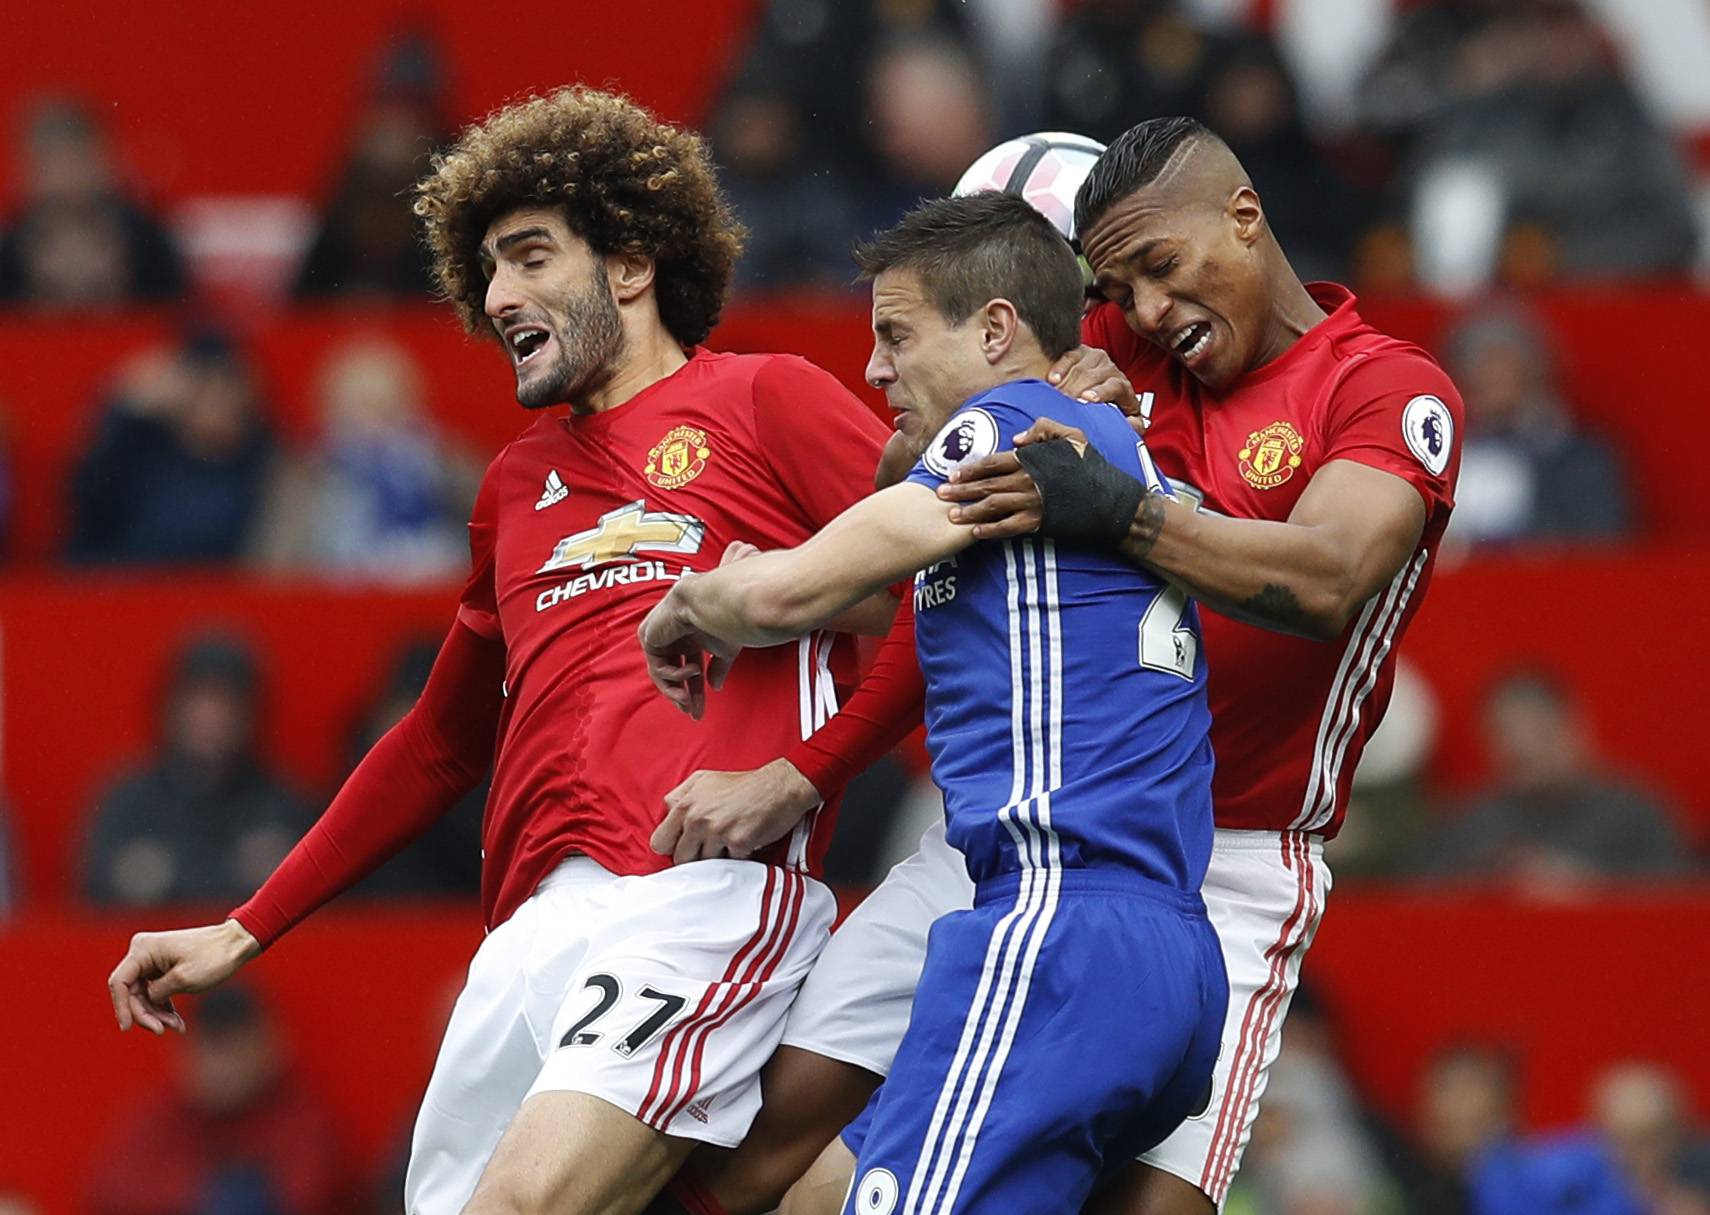 Manchester United's Marouane Fellaini and Antonio Valencia in action with Chelsea's Cesar Azpilicueta